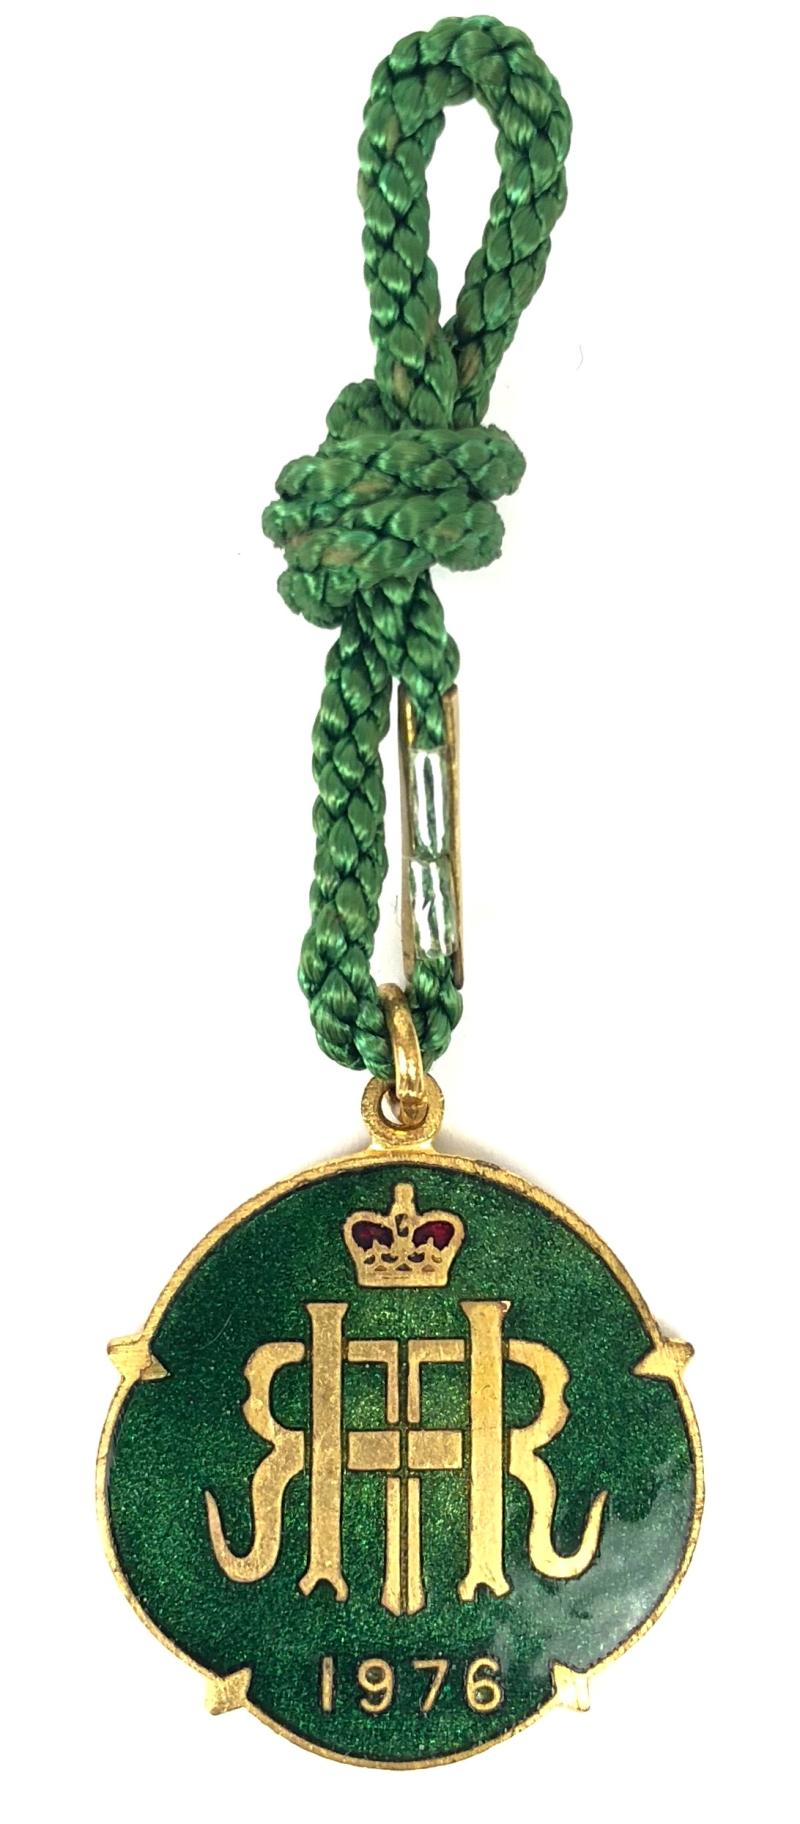 1976 Henley Royal Regatta stewards enclosure badge